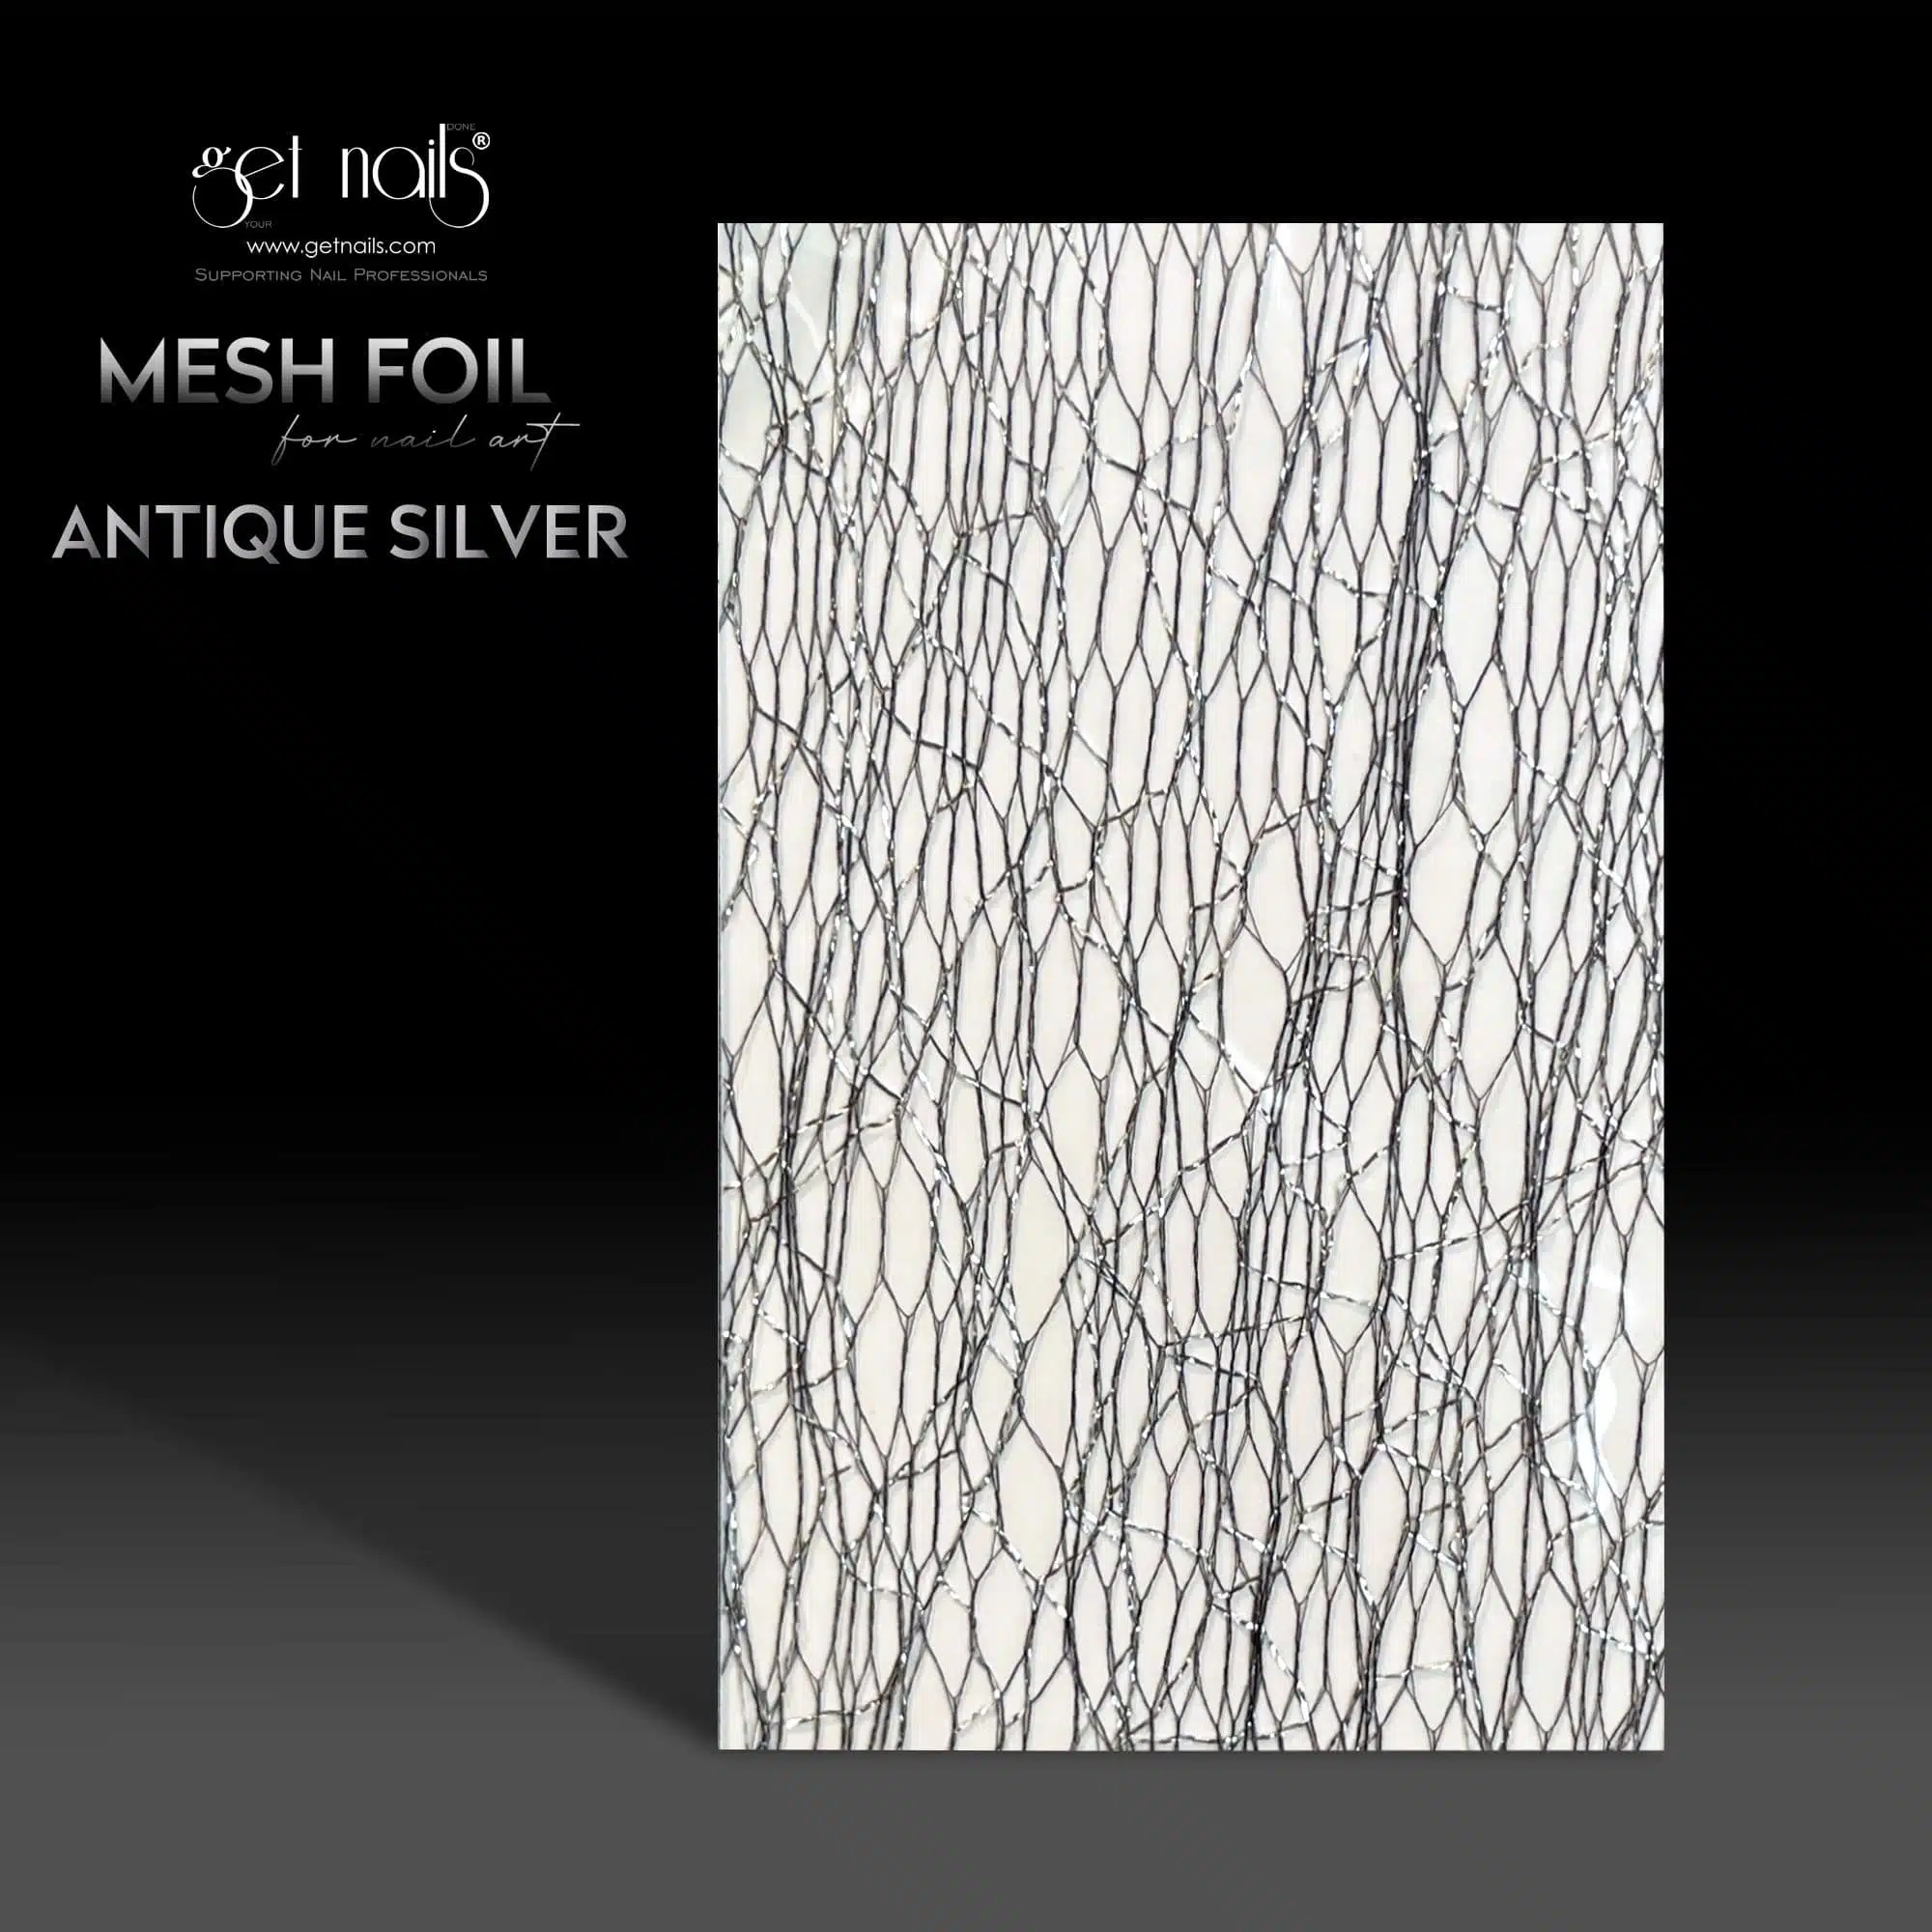 Get Nails Austria - Mesh Folie Antique Silver